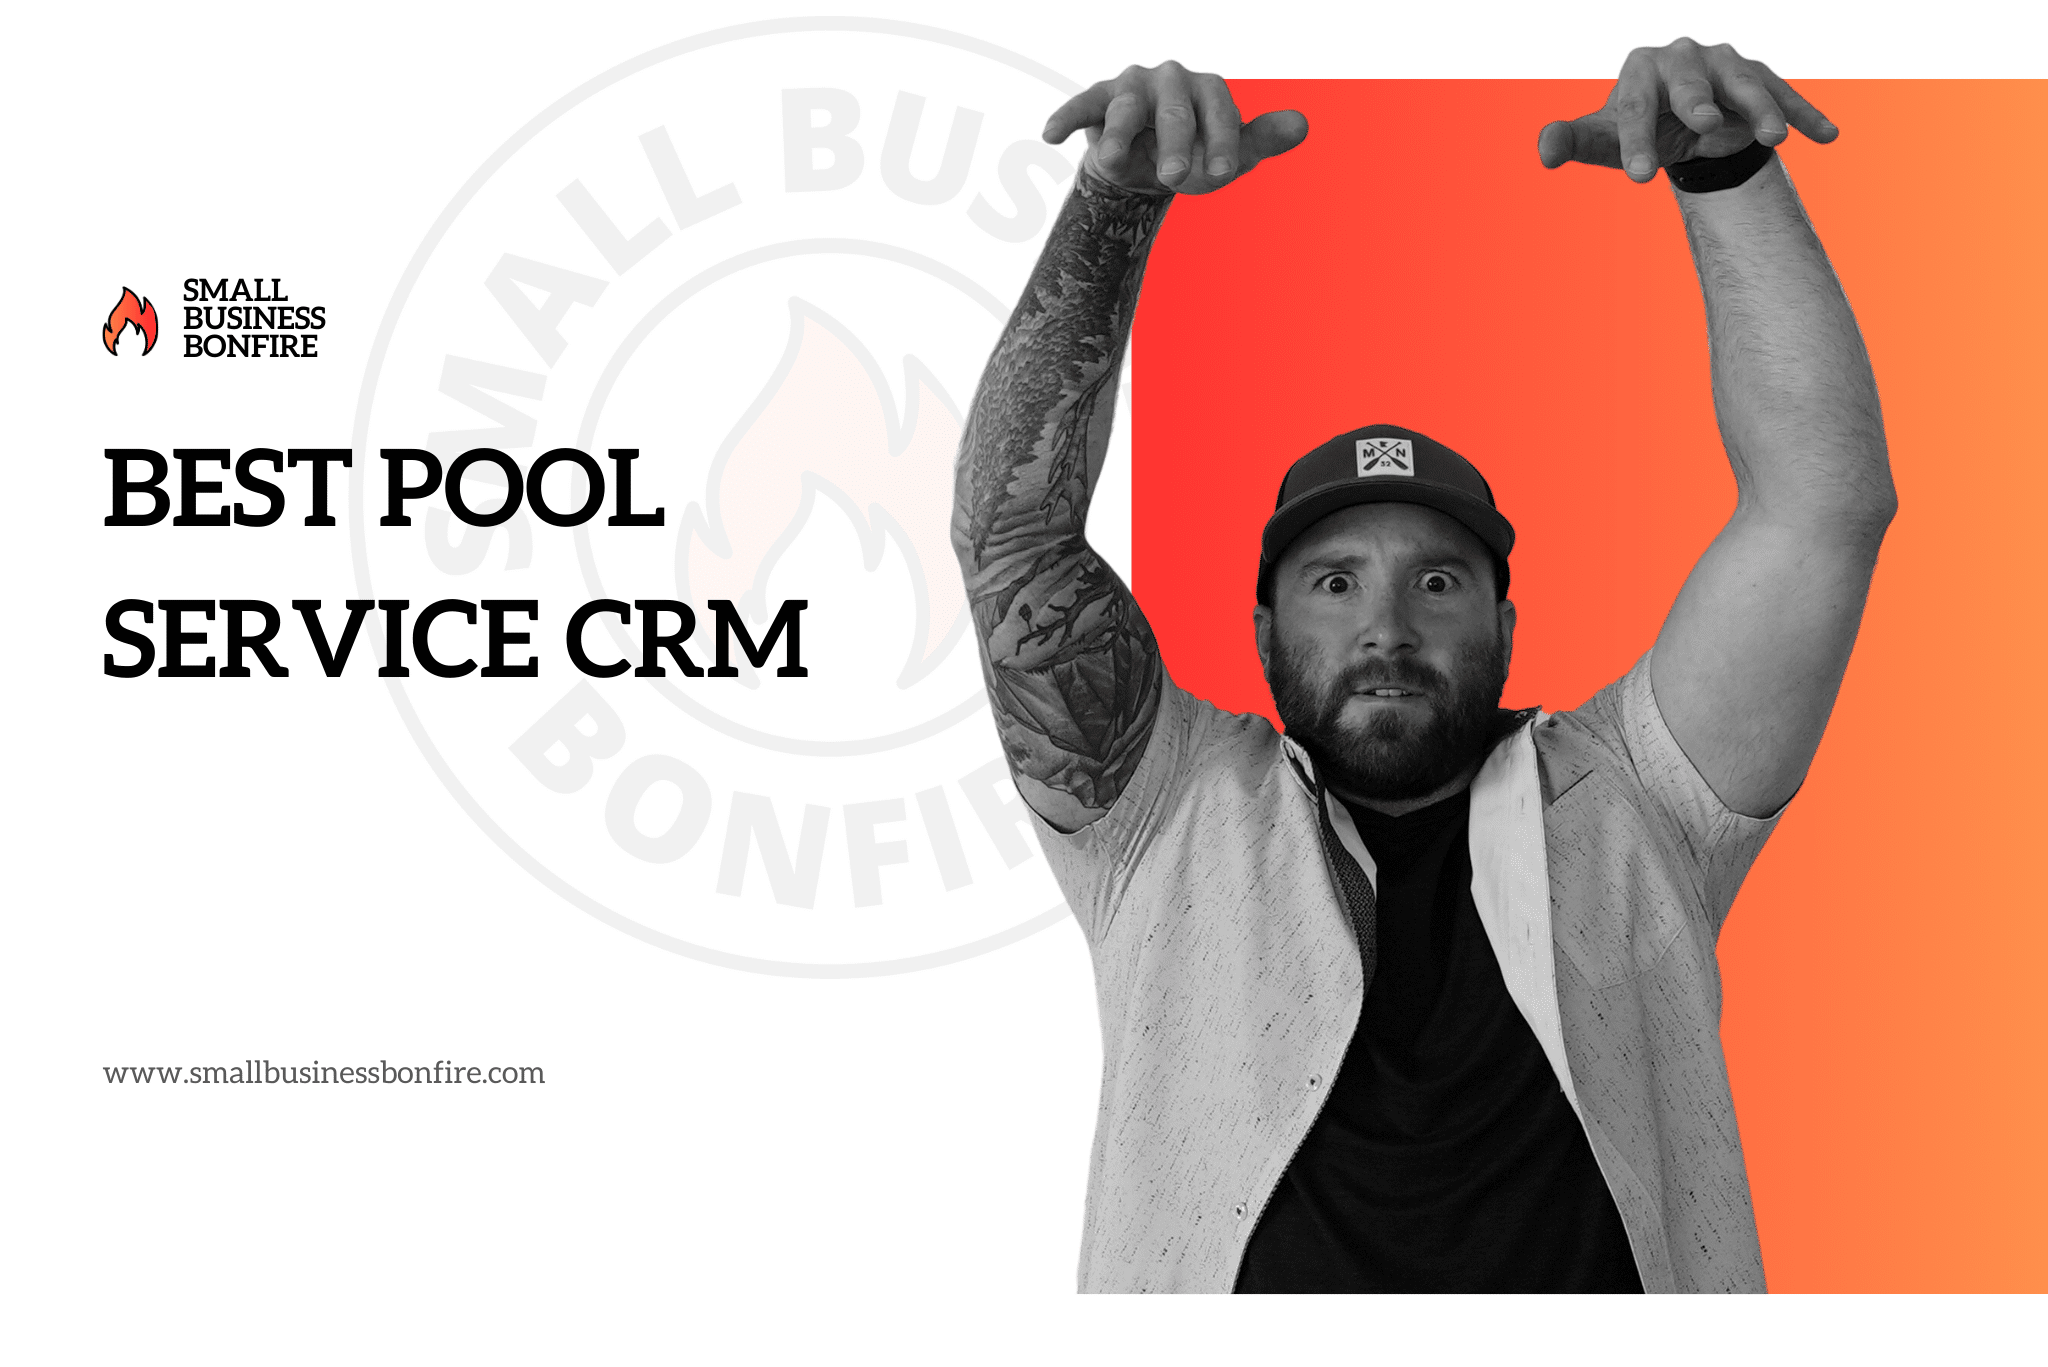 Best Pool Service CRM - Hero Image